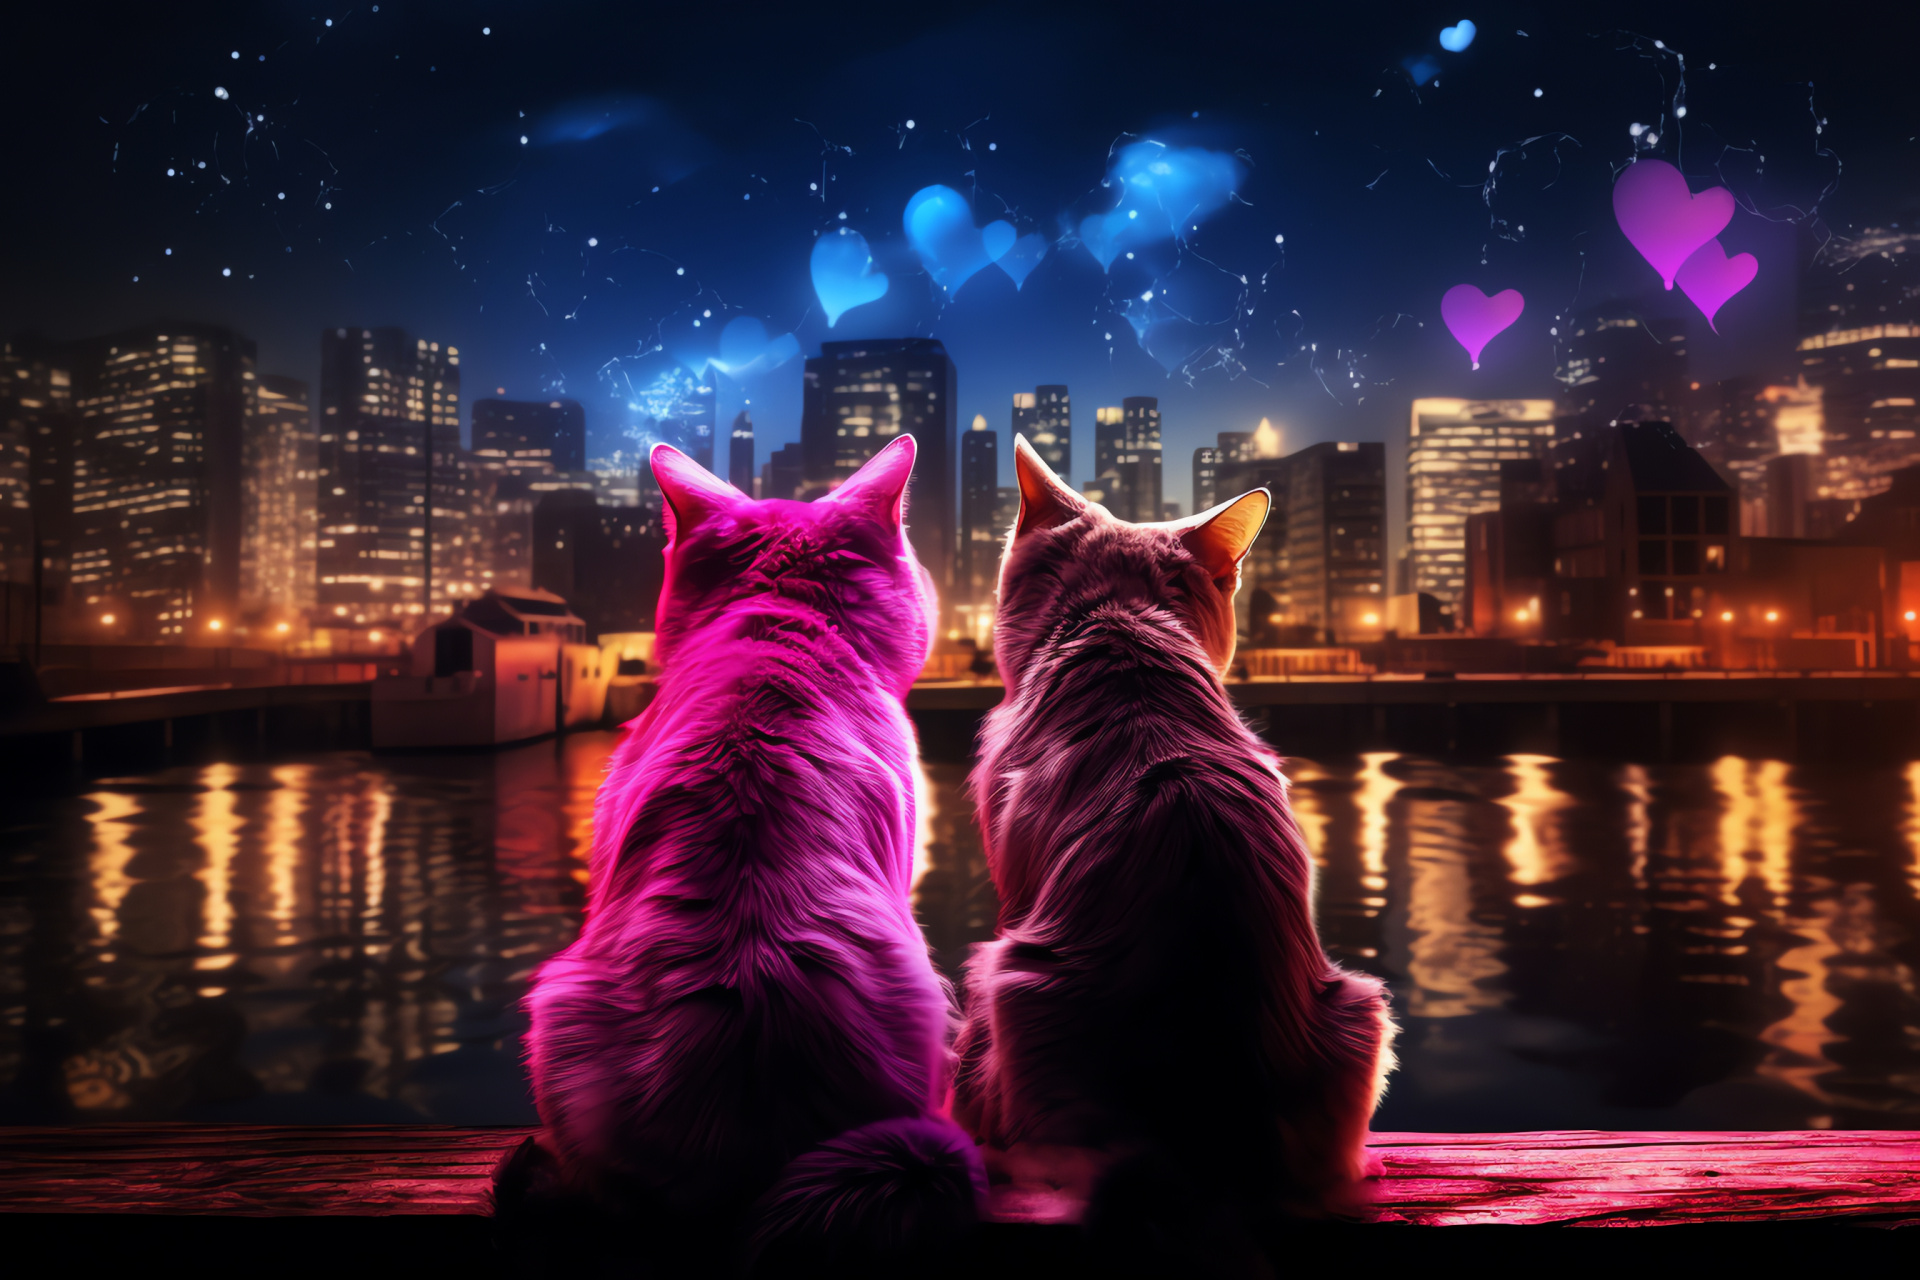 Urban cats Valentine, Metropolitan skyline, Evening charisma, Illuminating displays, City celebration, HD Desktop Image